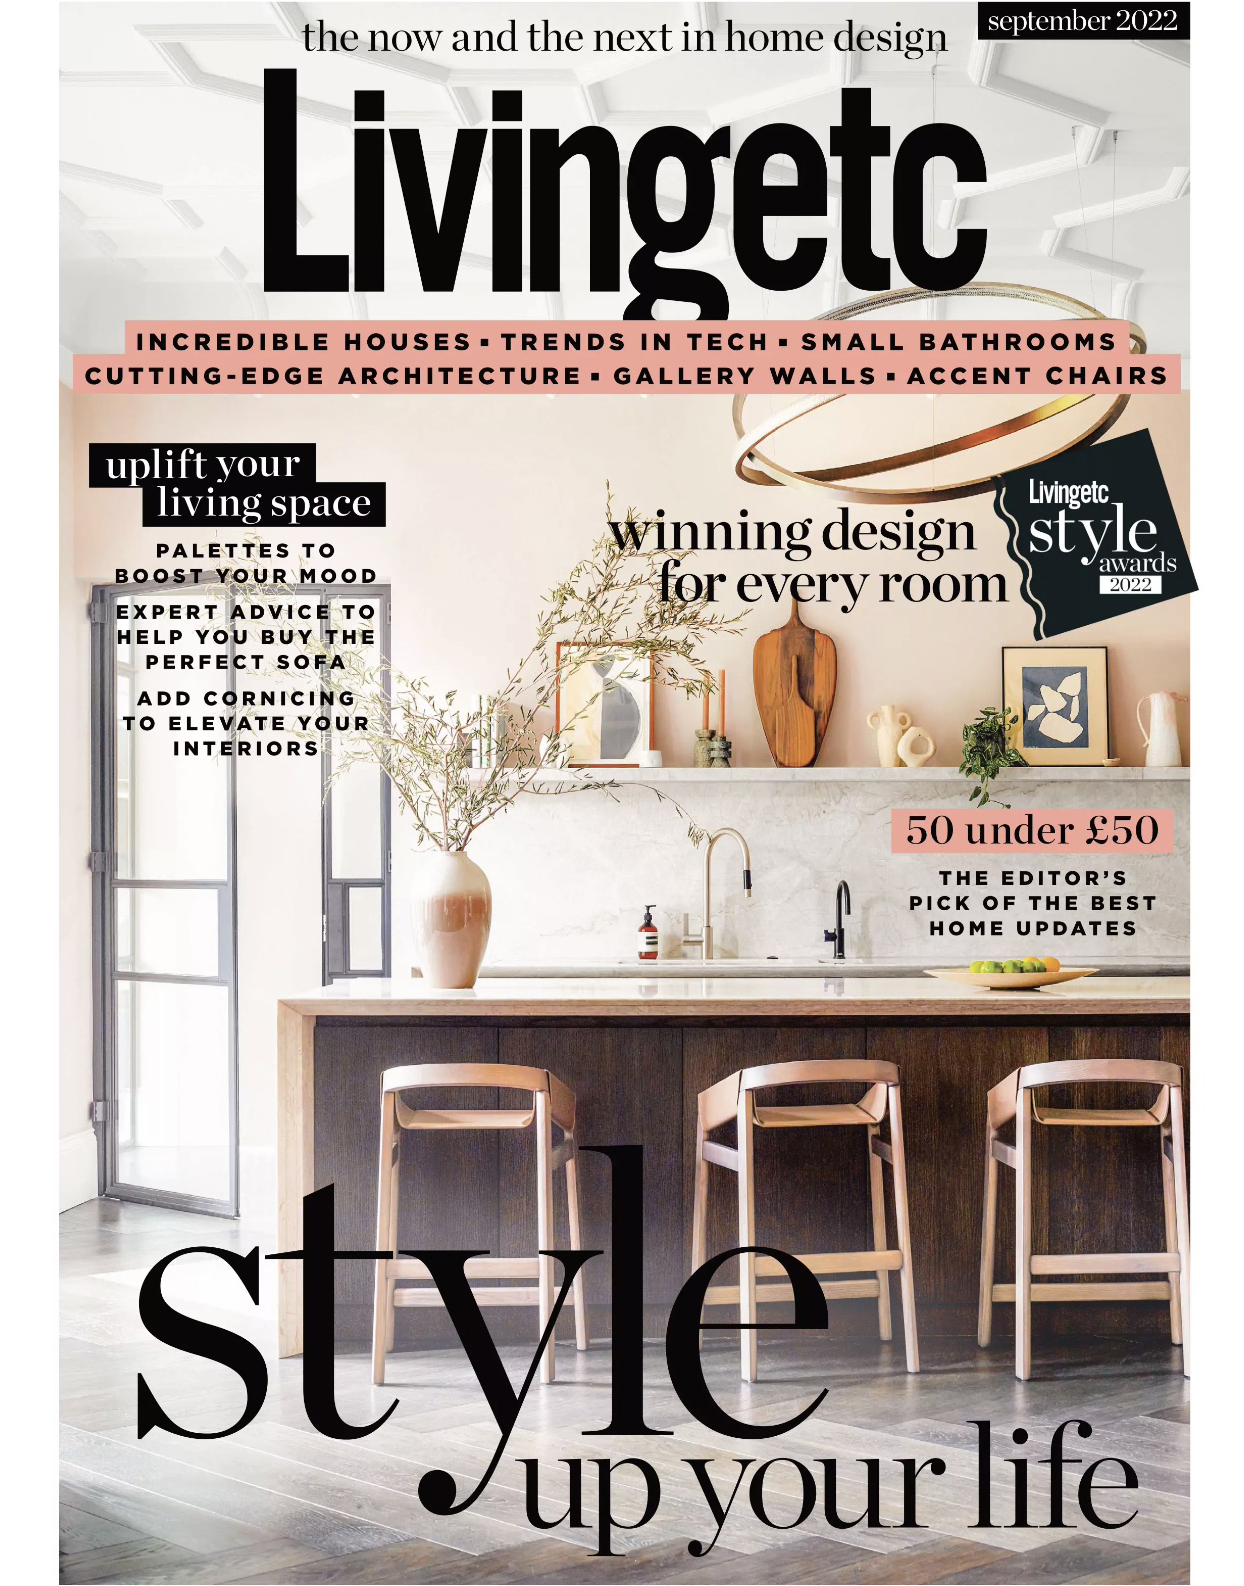 Ruffle Sage presented in the Livingetc Magazine September 2022